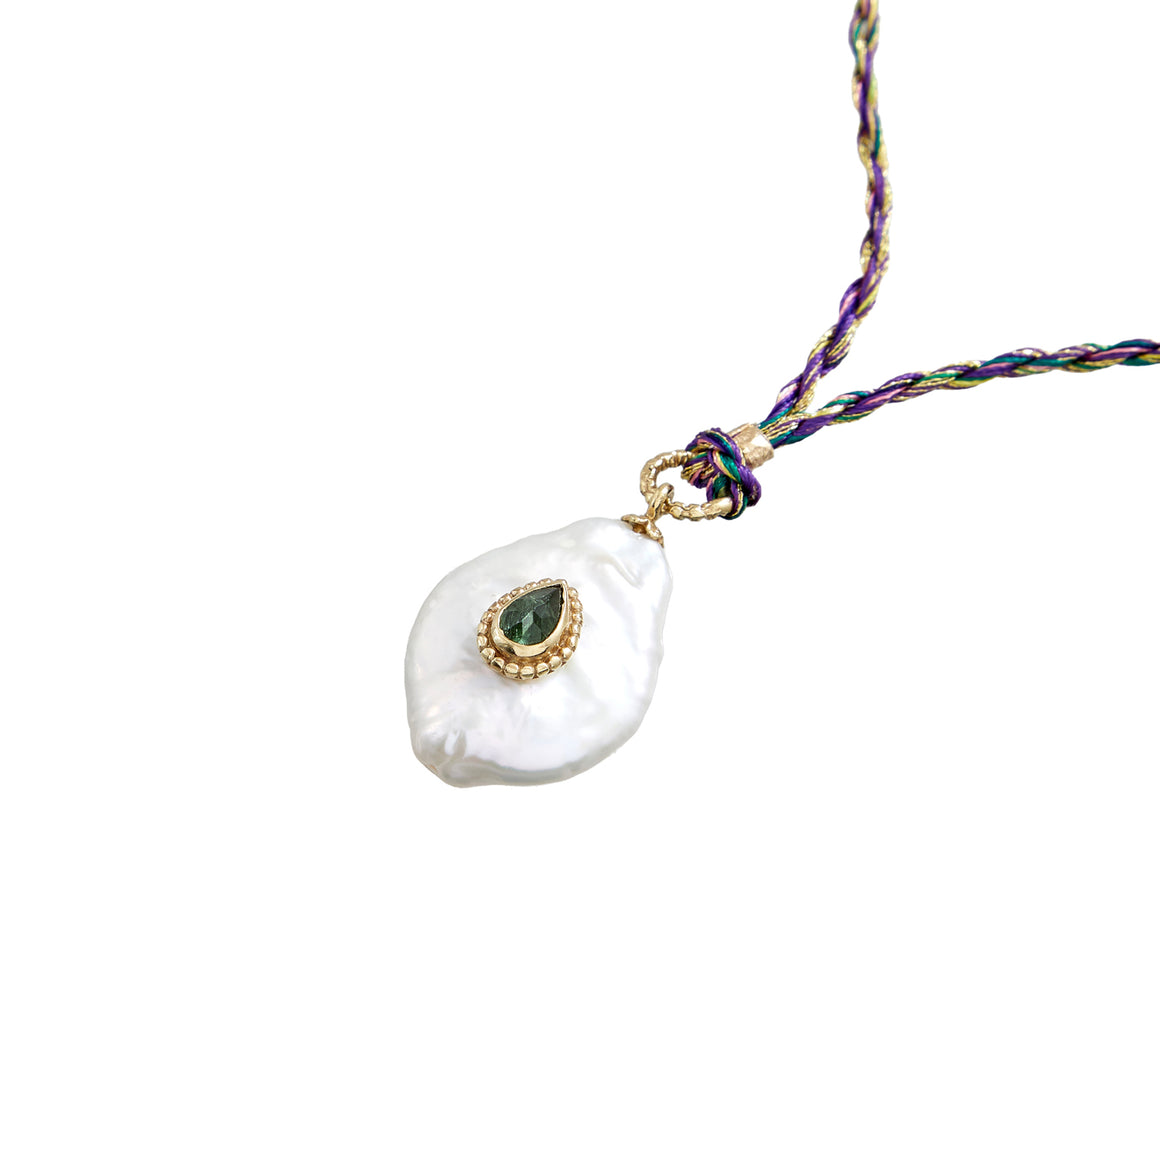 NAIADE Collier Perle baroque Tourmaline verte sur cordon de soie - Argent 925 plaqué or